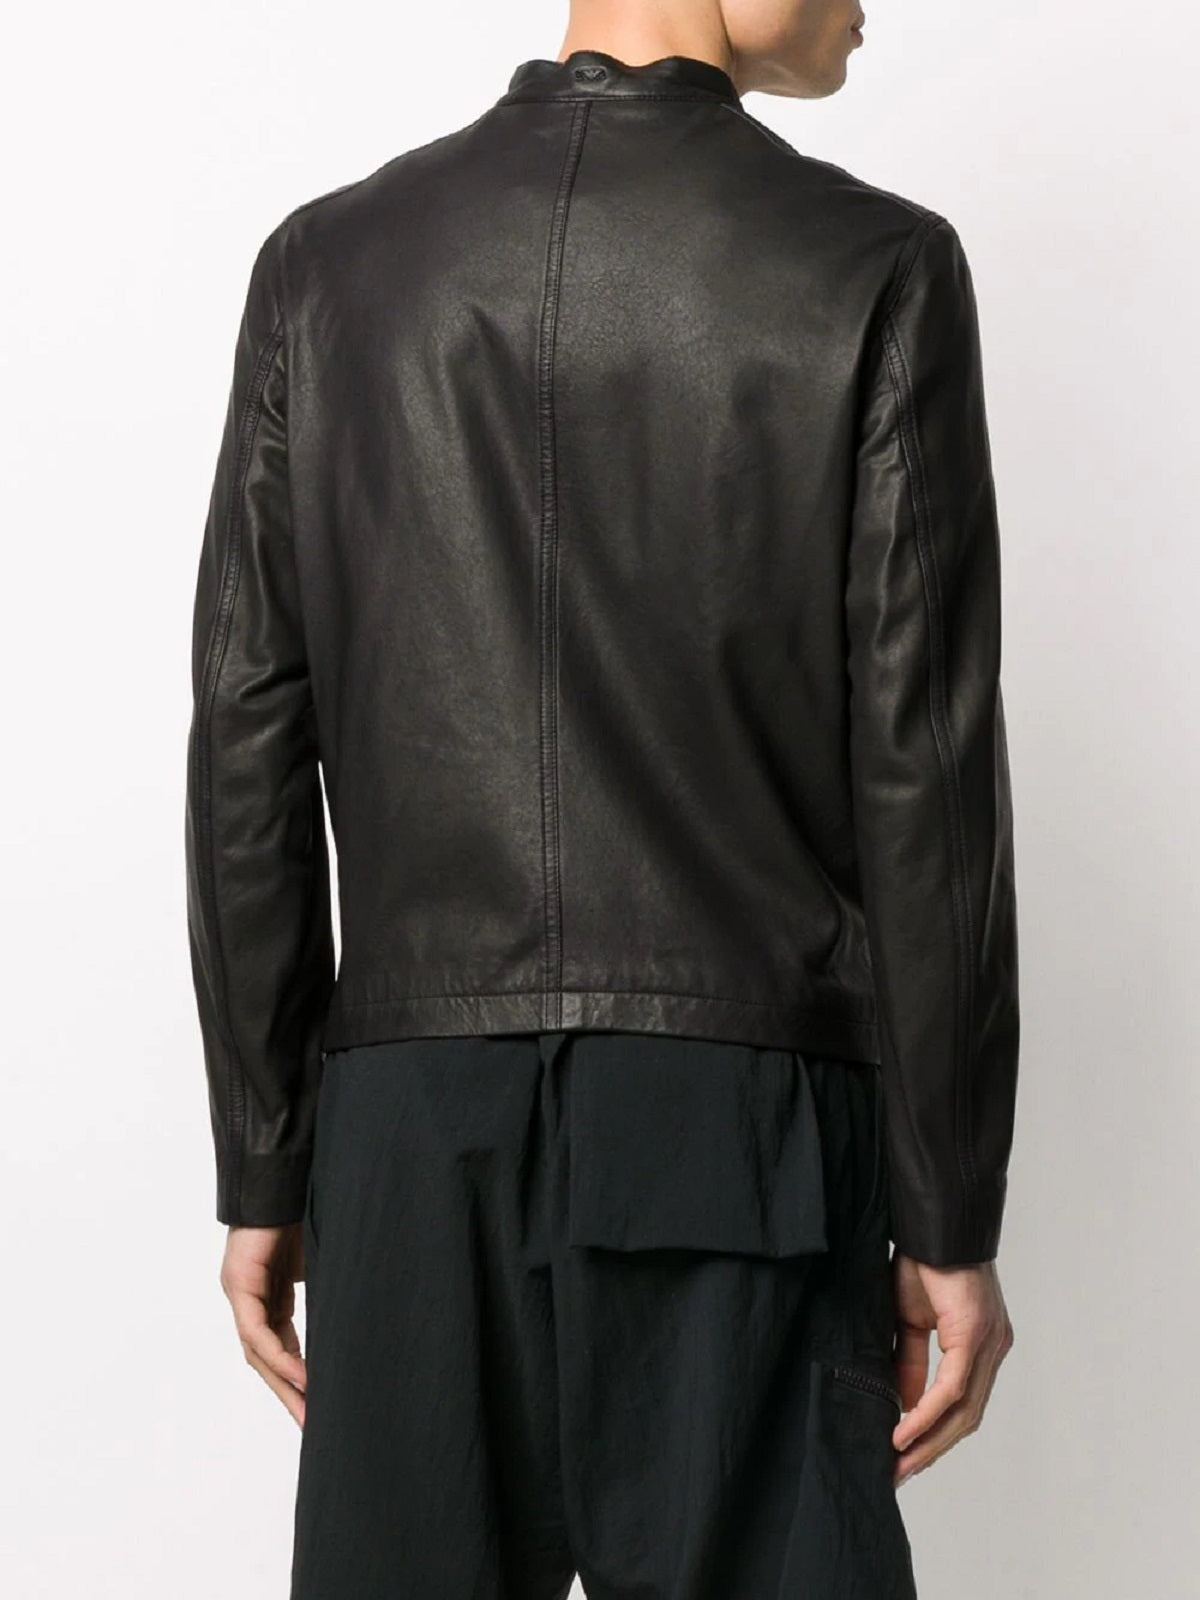 trending brown leather jacket for men